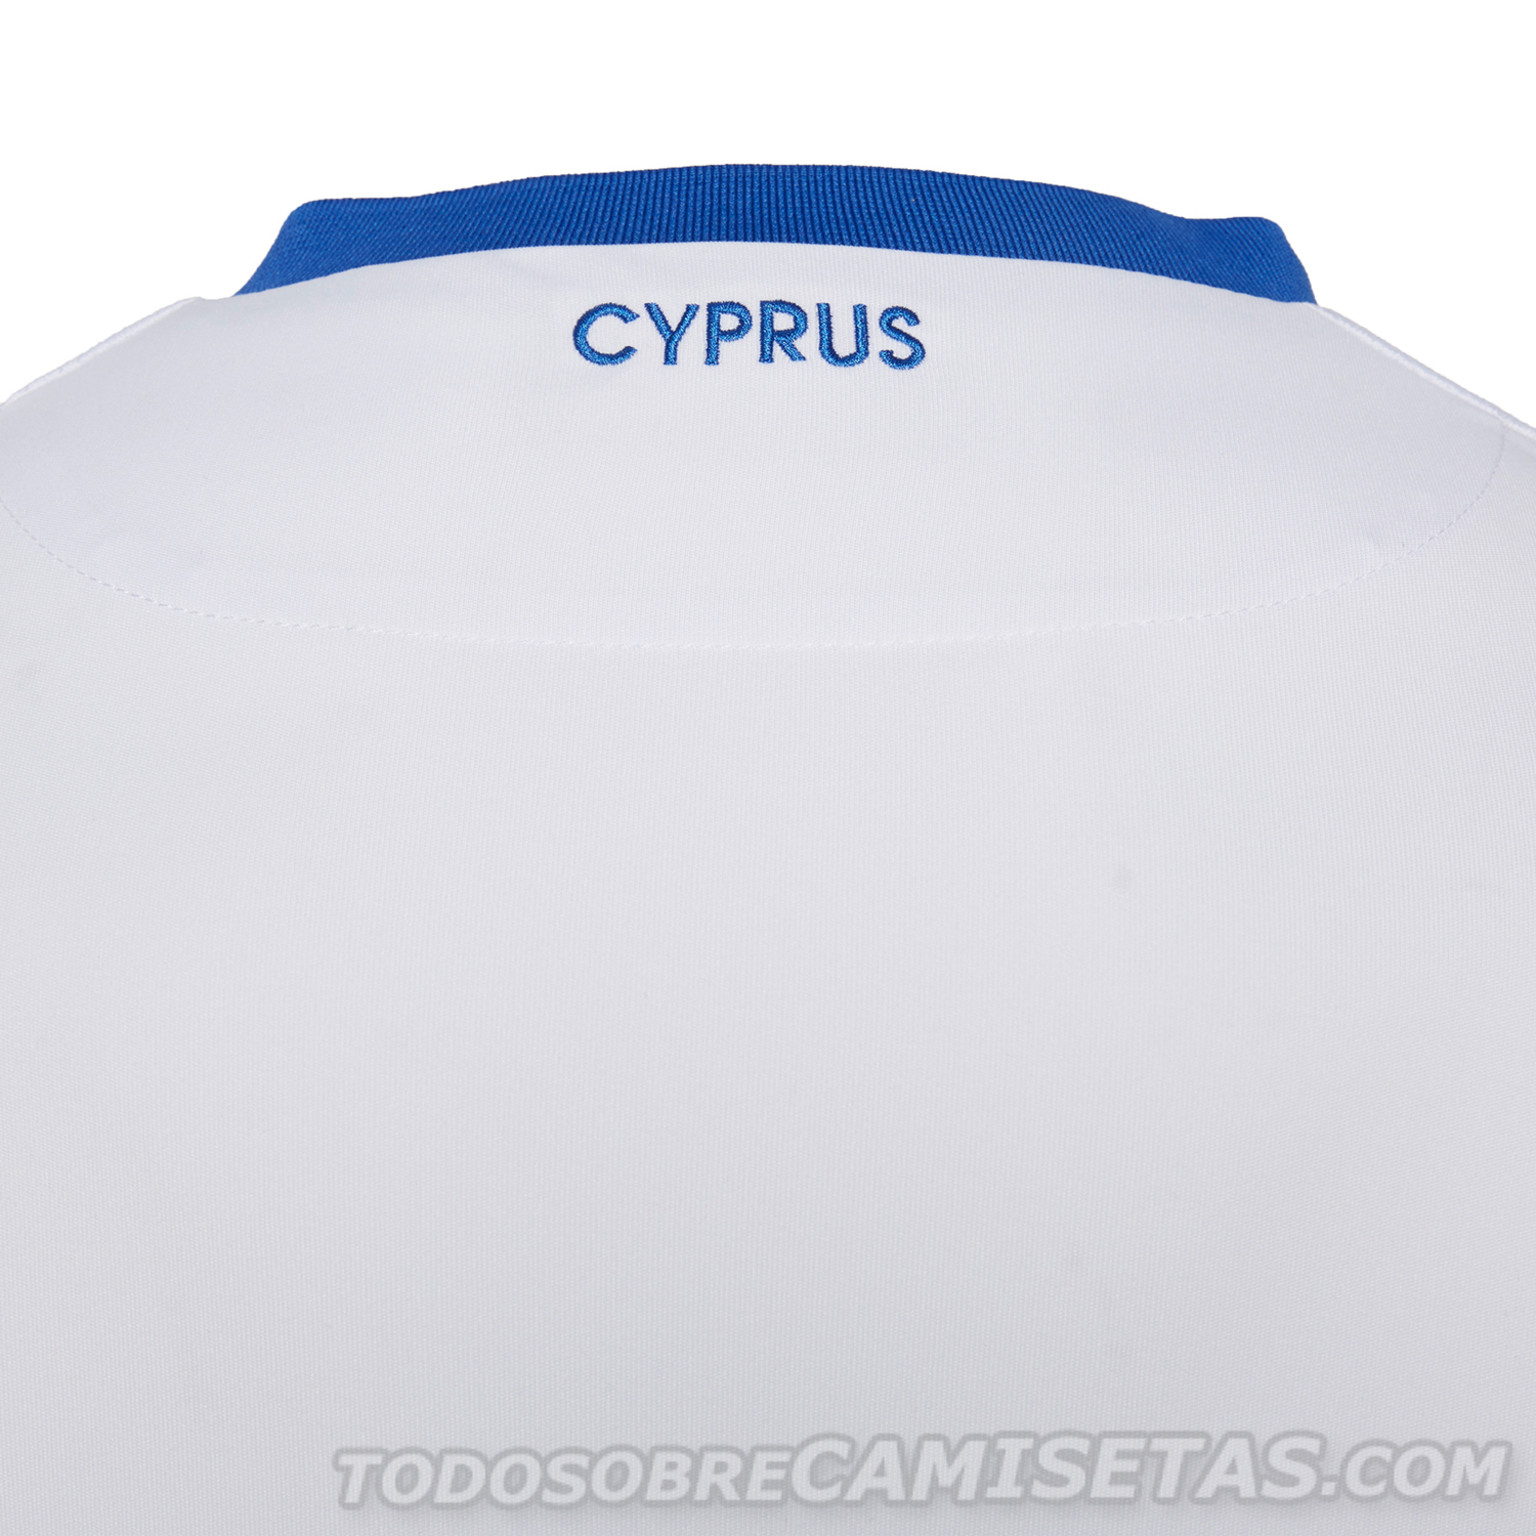 Cyprus Macron Kits 2018-19